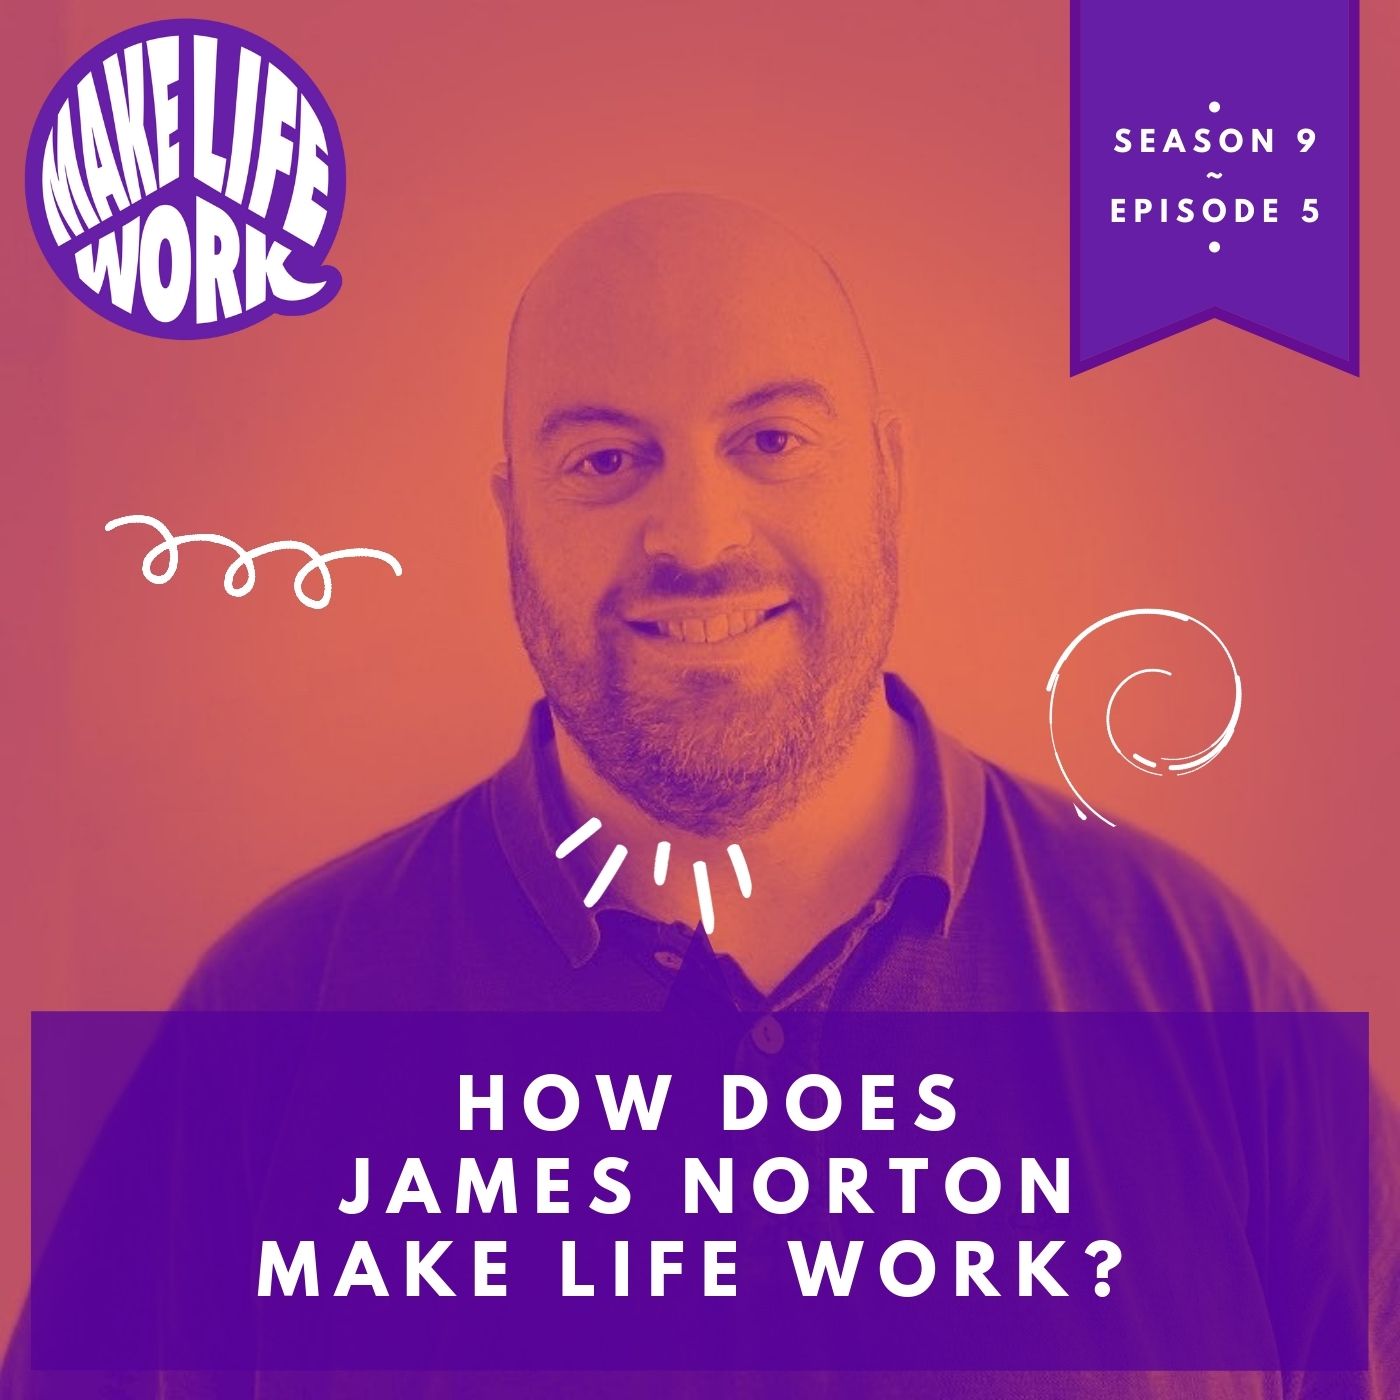 How does James Norton make life work?